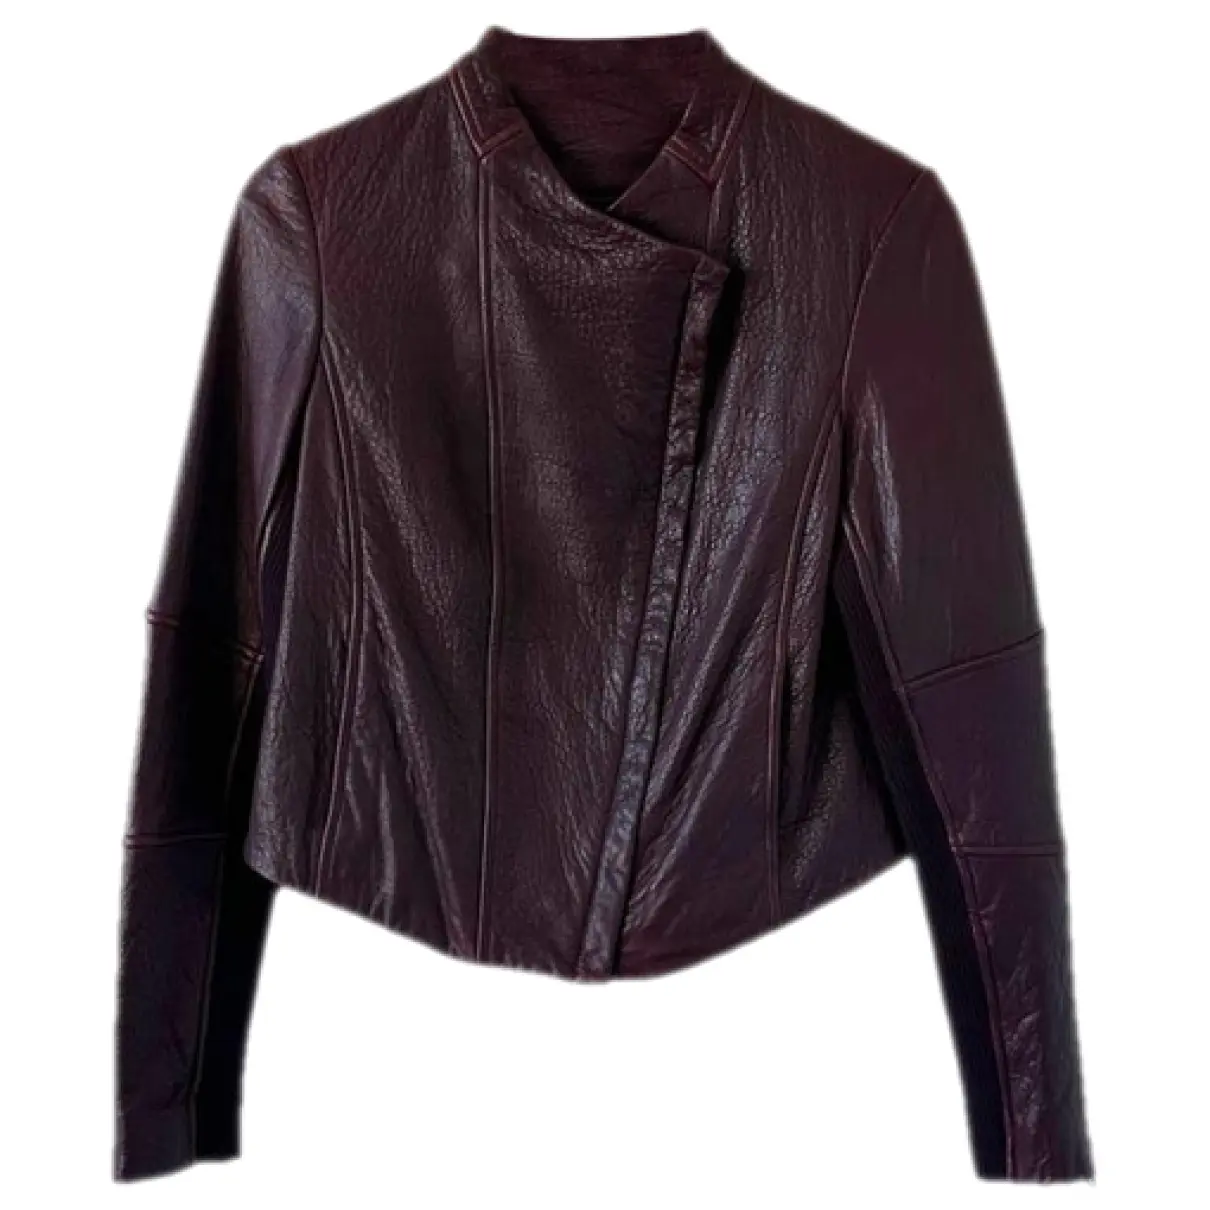 Leather jacket Vince